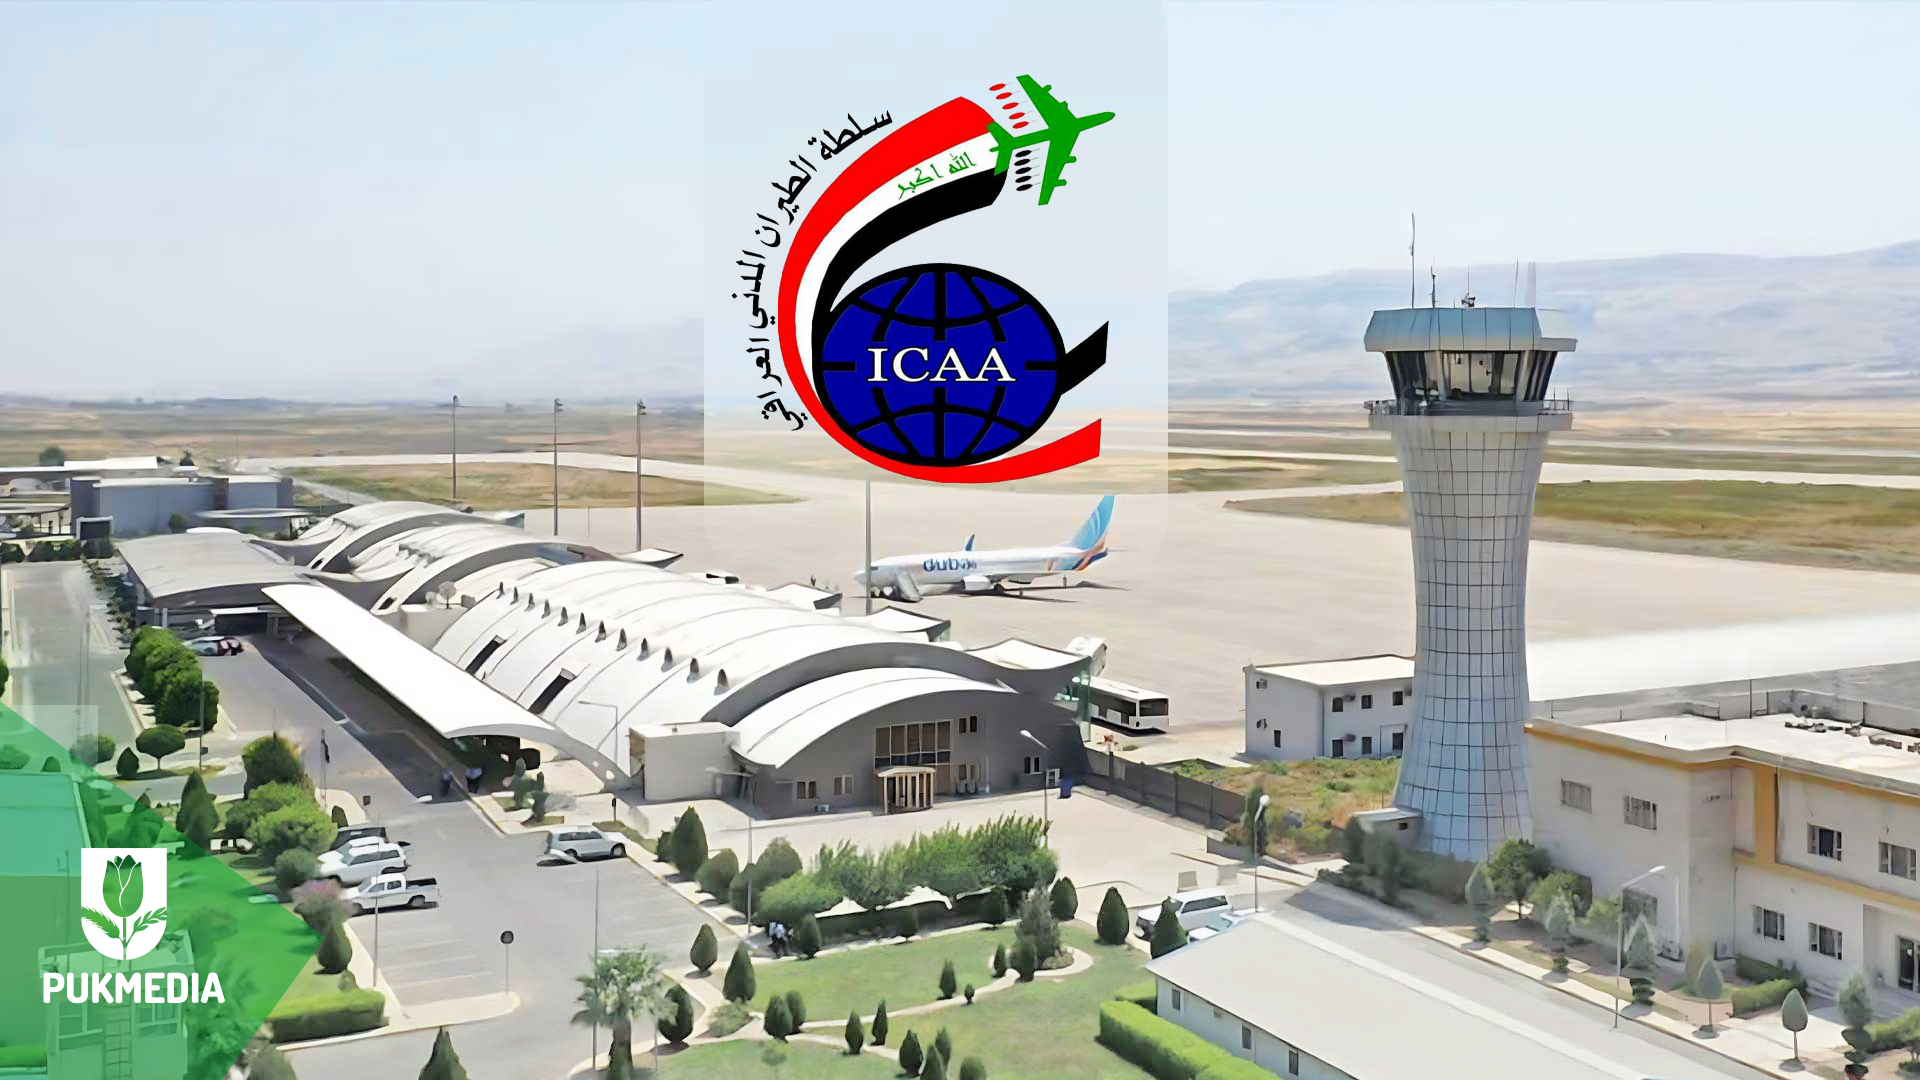 Sulaymaniyah International Airport and ICAA logo